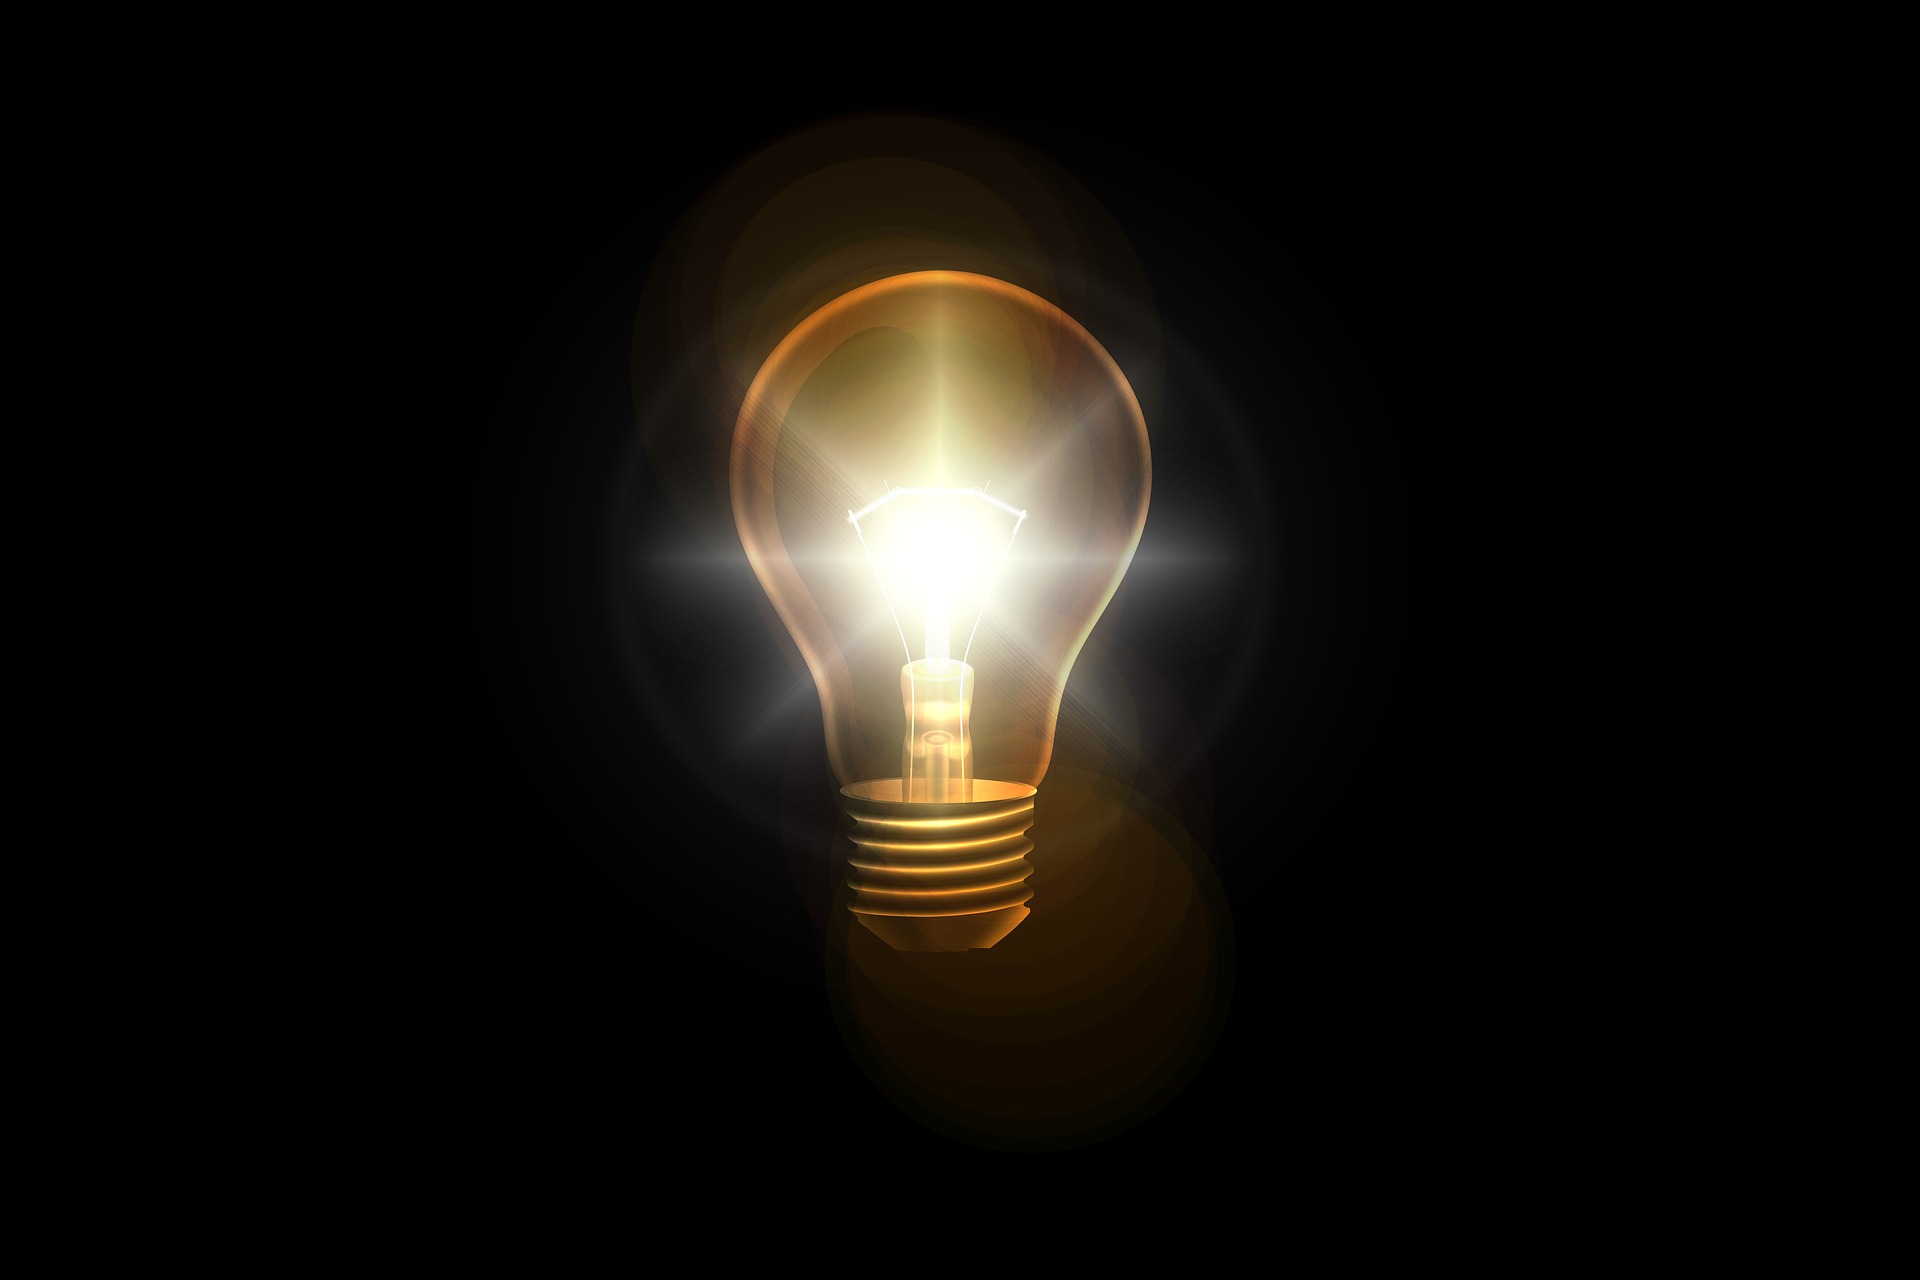 A incandescent light bulb lit against a black background.